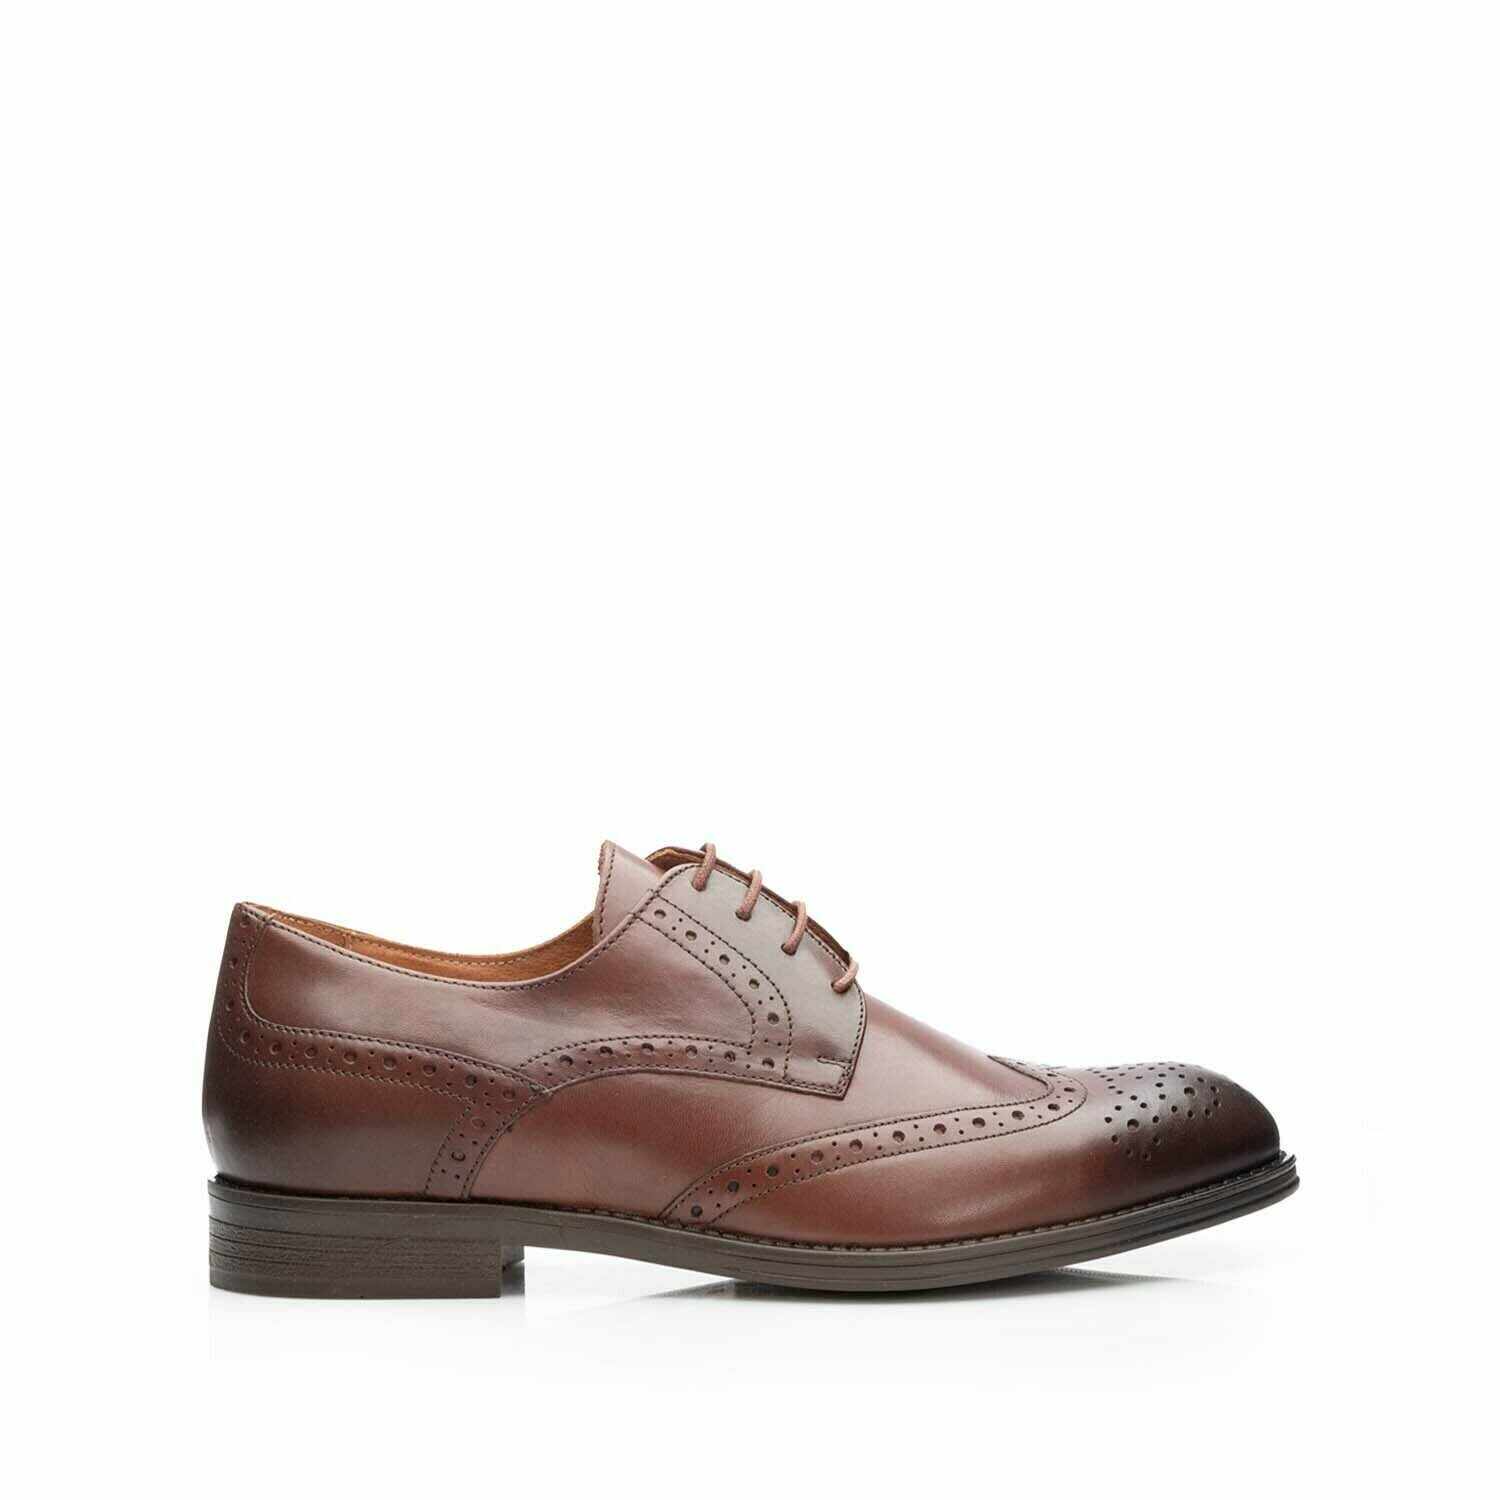 Pantofi barbati eleganti din piele naturala Leofex-516 Red Wood